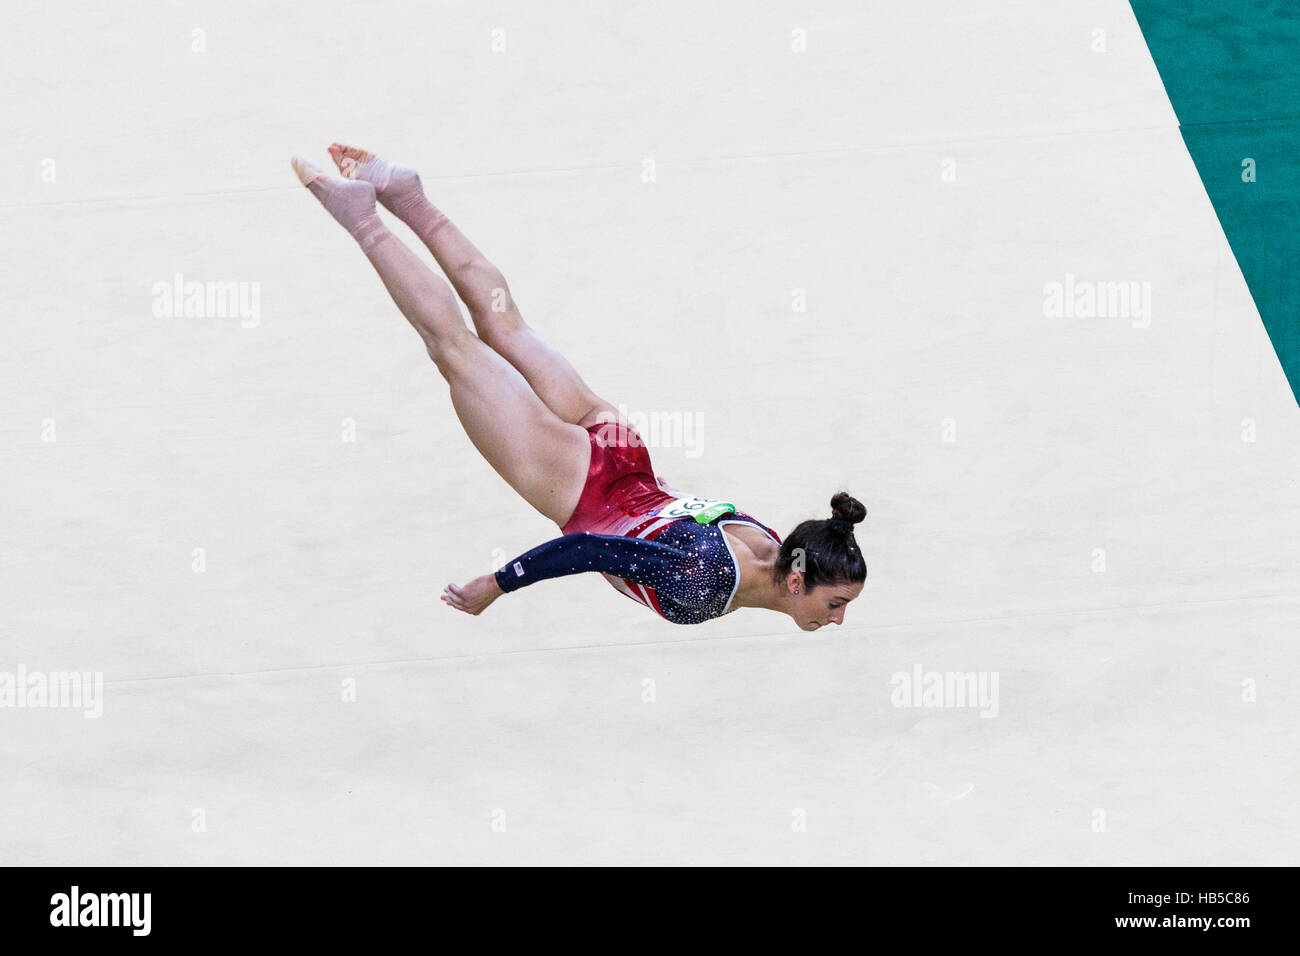 Rio de Janeiro, Brazil. 9 August 2016.  Alexandra Raisman (USA) performs the floor exercise as part of the Gold medal winning Women's Gymnastics Team  Stock Photo